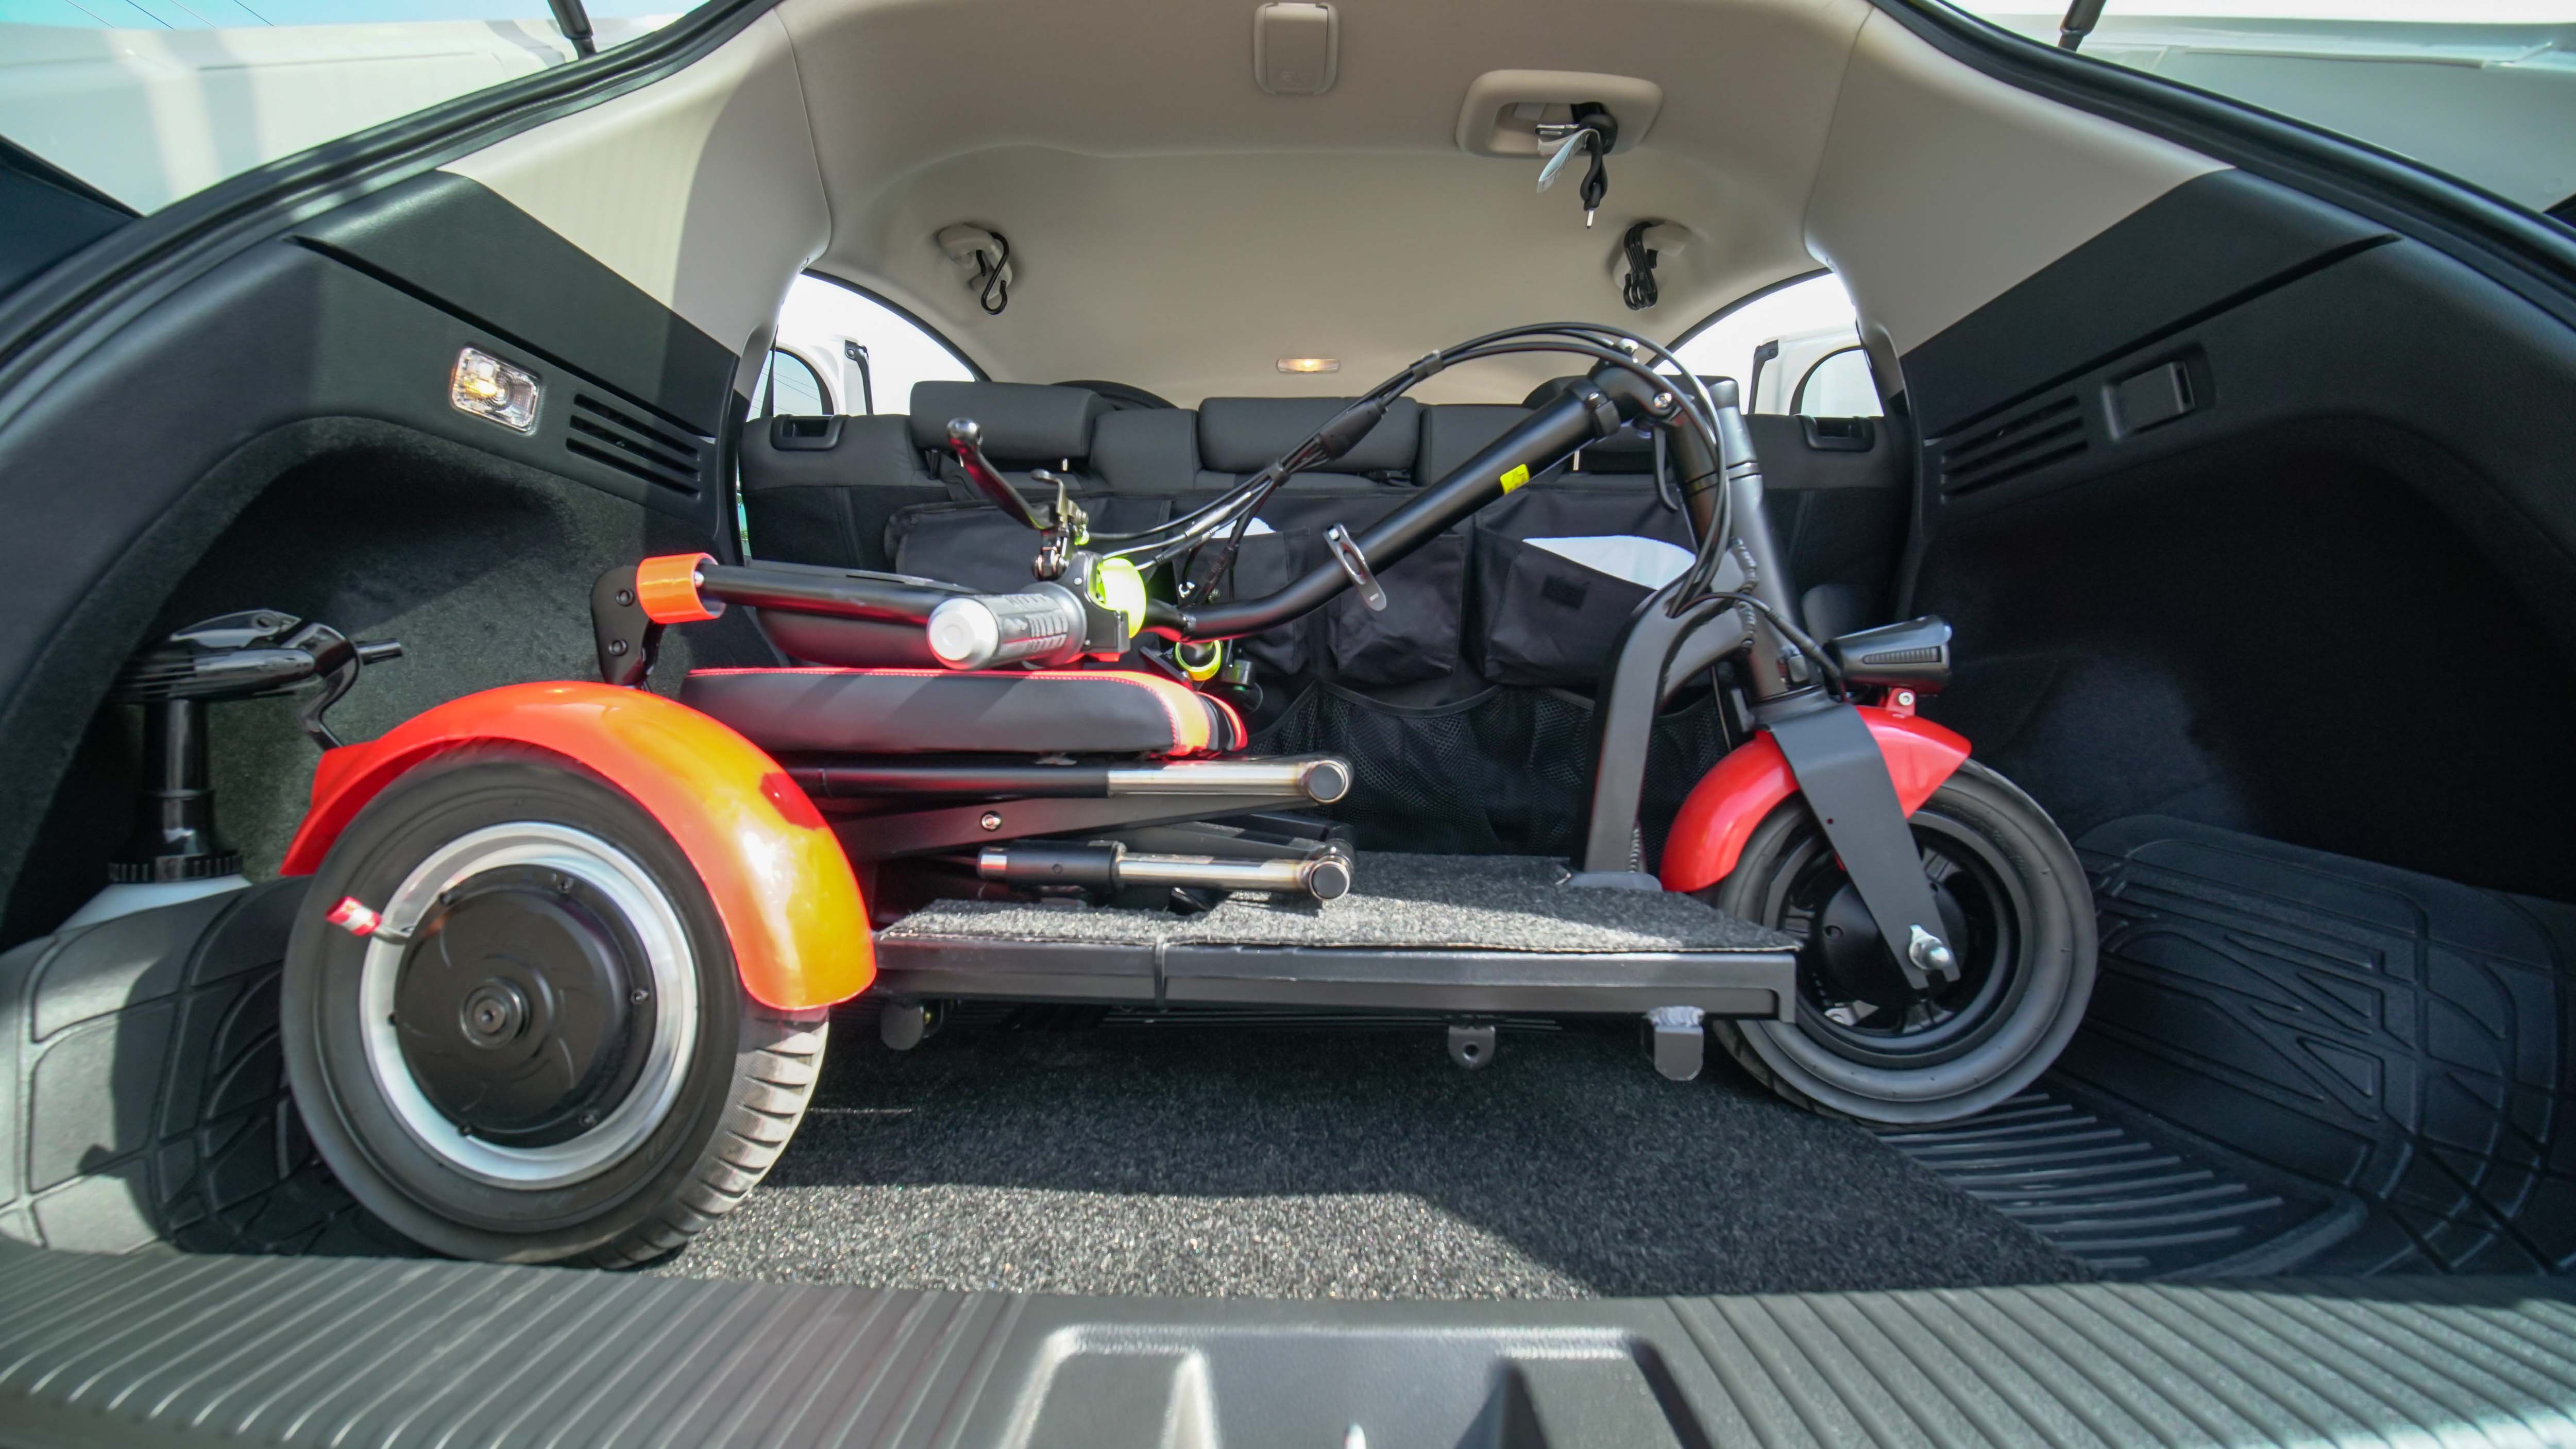 Foldable electric wheelchair inside a car